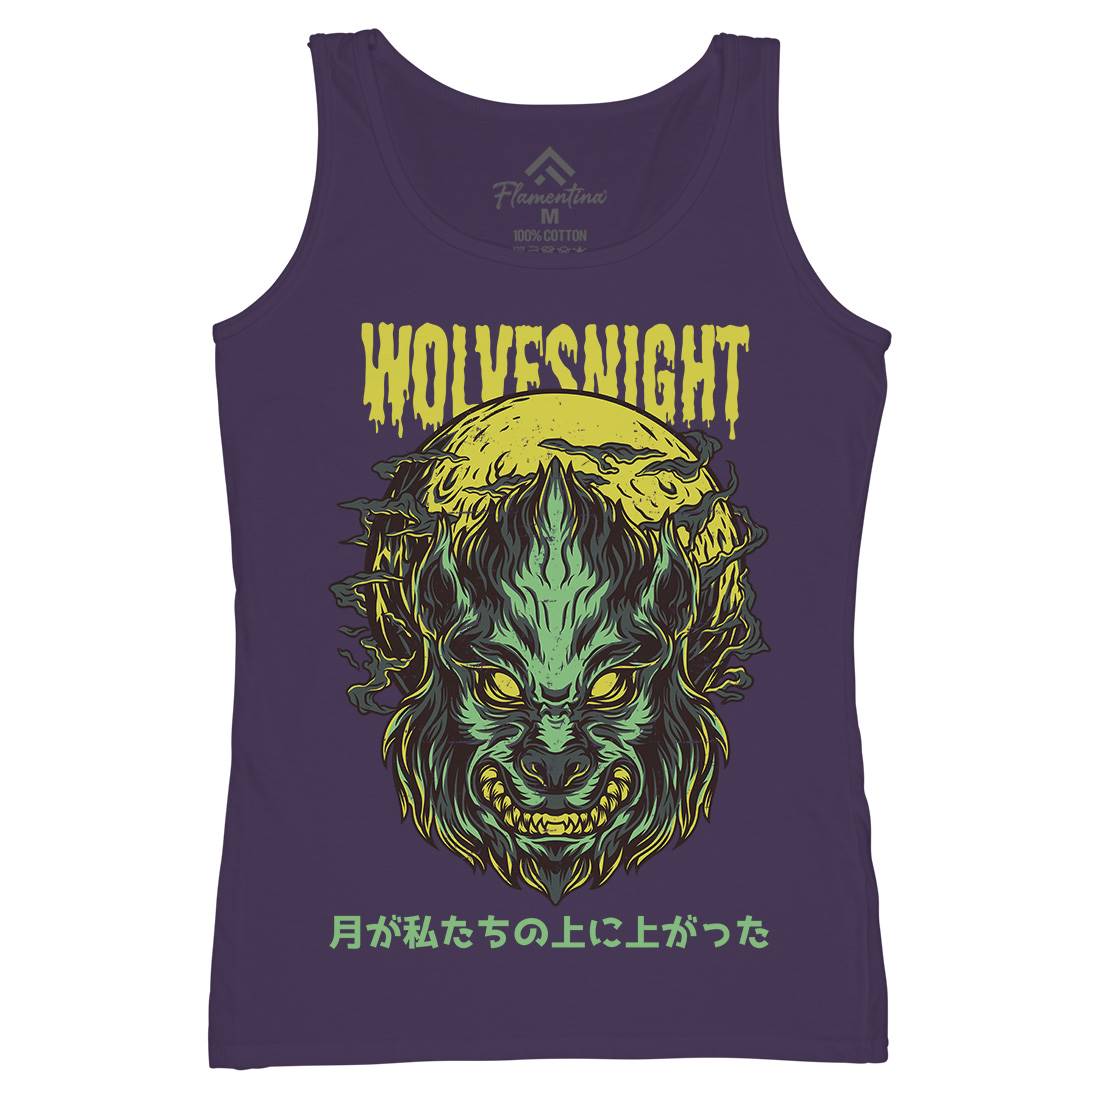 Wolves Night Womens Organic Tank Top Vest Horror D888